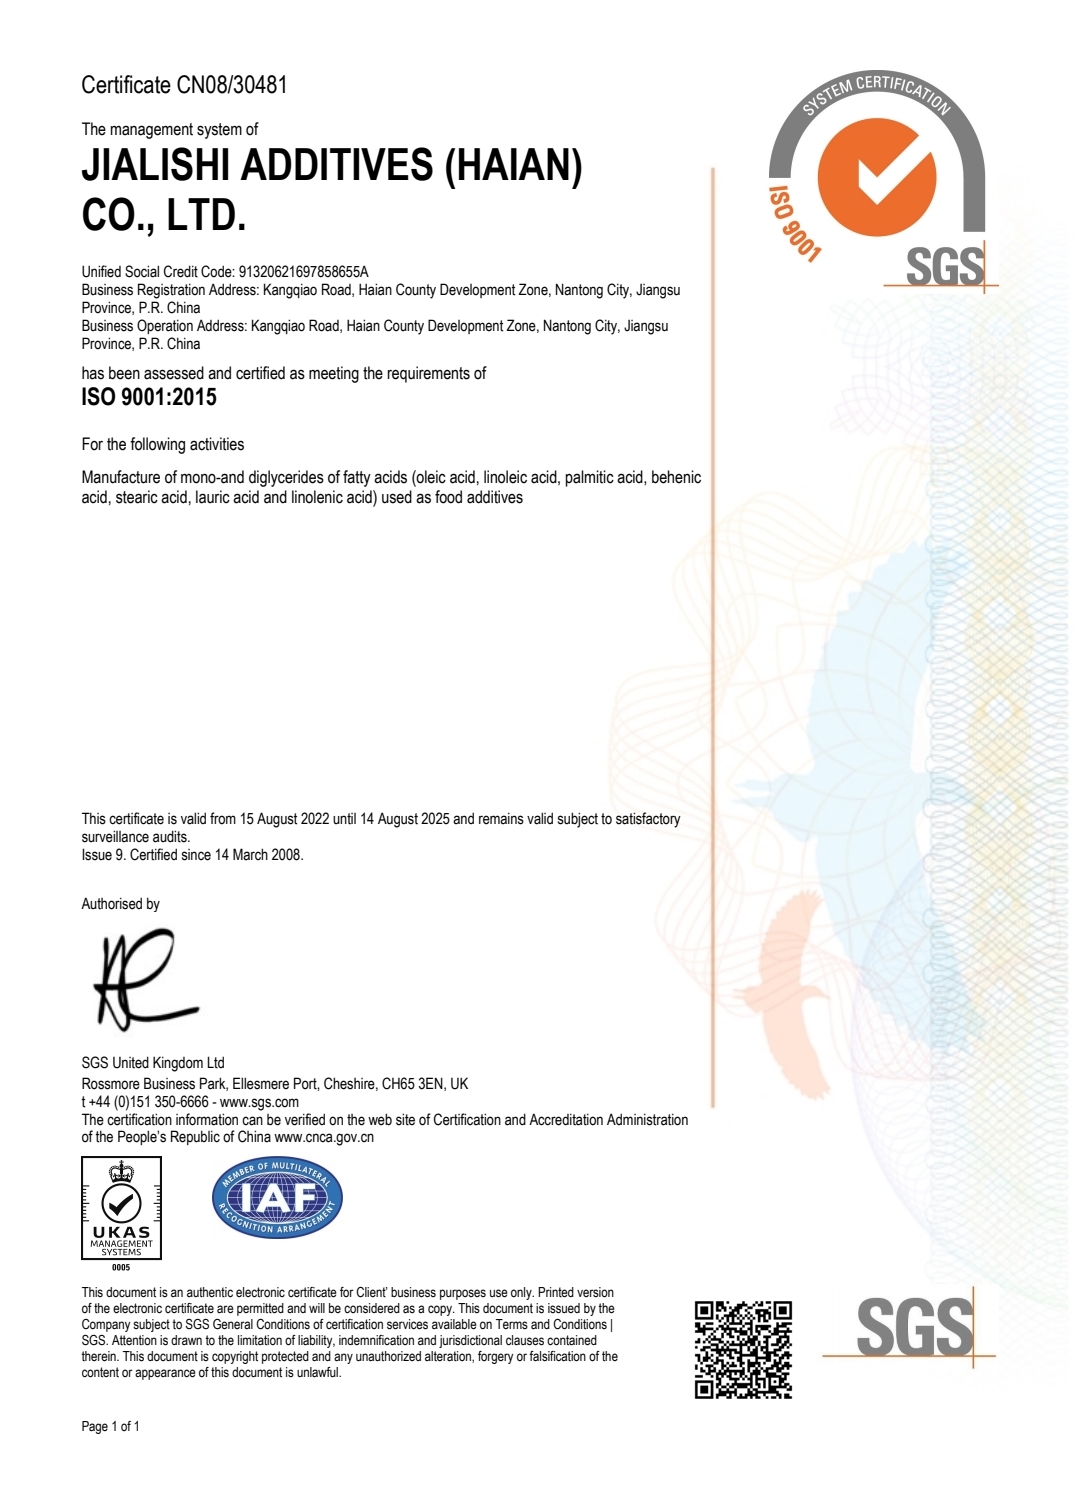 ISO9001:2015英文